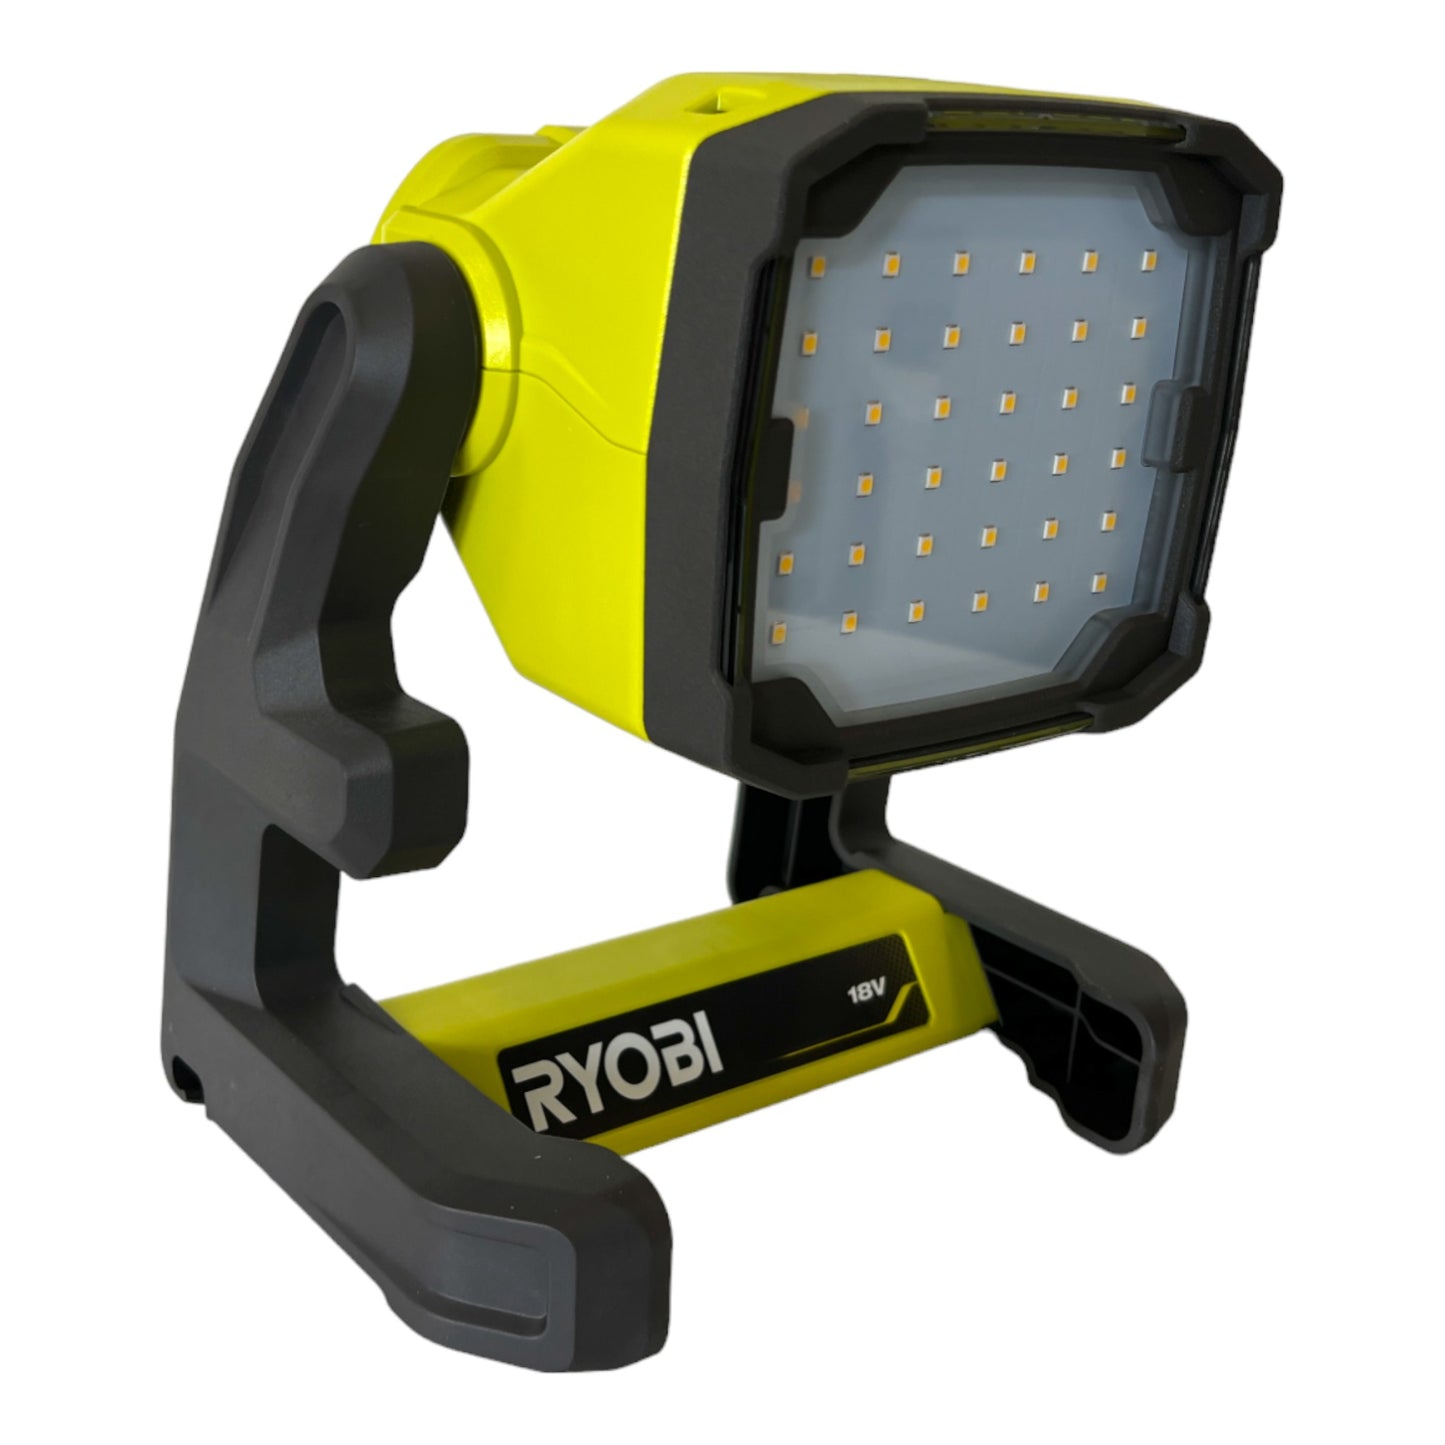 RYOBI RLFD18-0 Akku LED Strahler 18 V 1800 lm ( 5133005399 ) Solo - ohne Akku, ohne Ladegerät